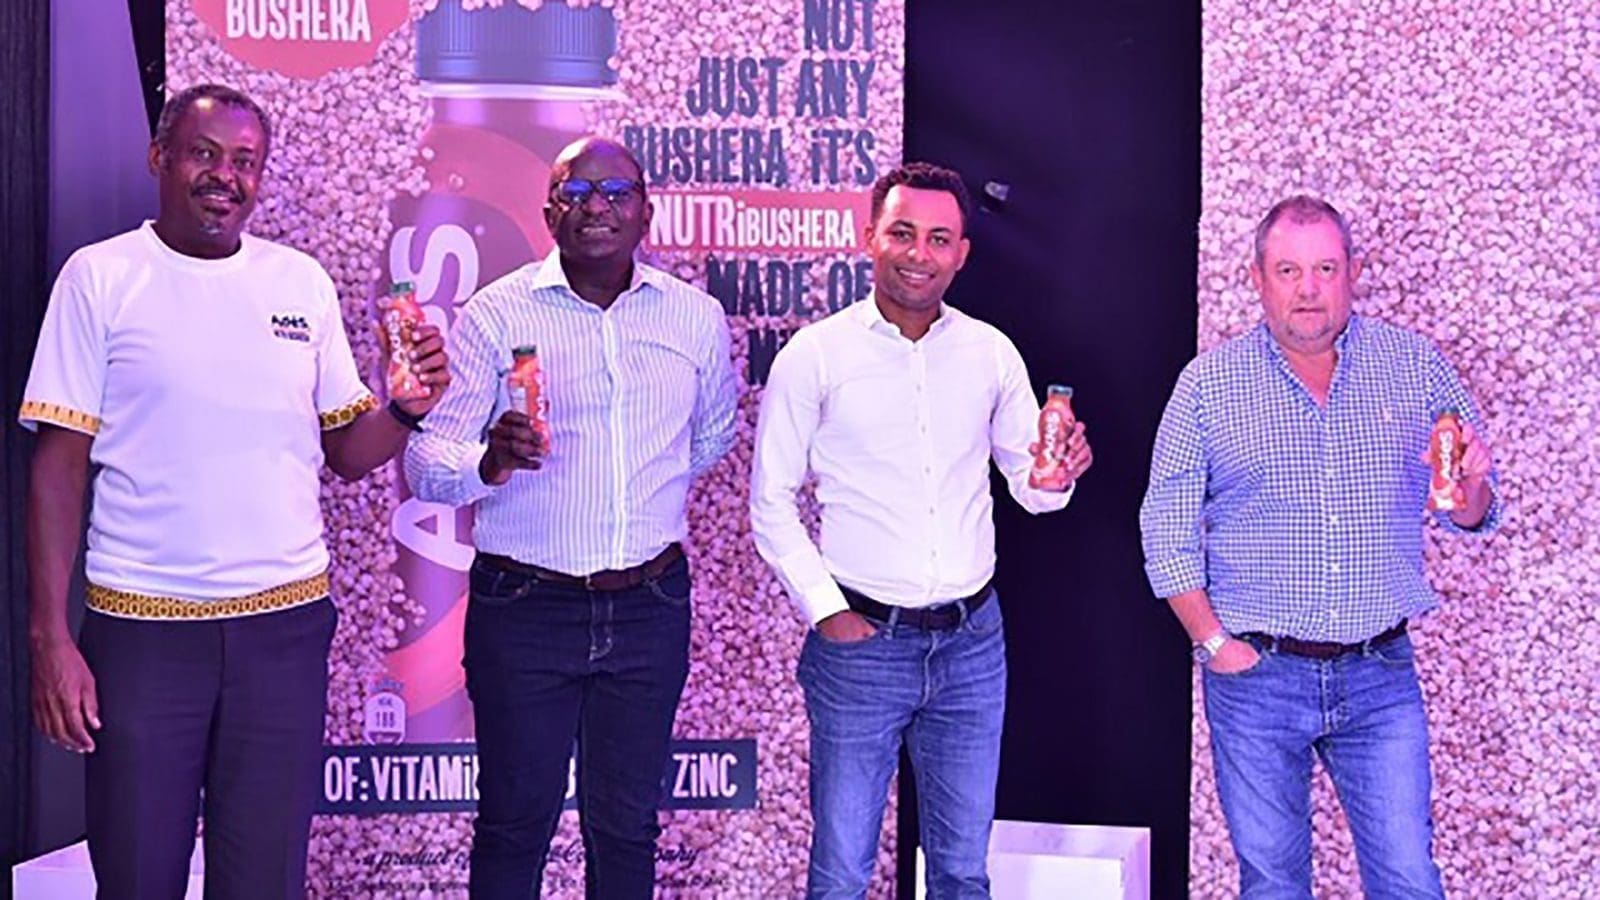 Coca-Cola Beverages Africa in Uganda launches new drink with unique local taste dubbed Ades Nutri-Bushera